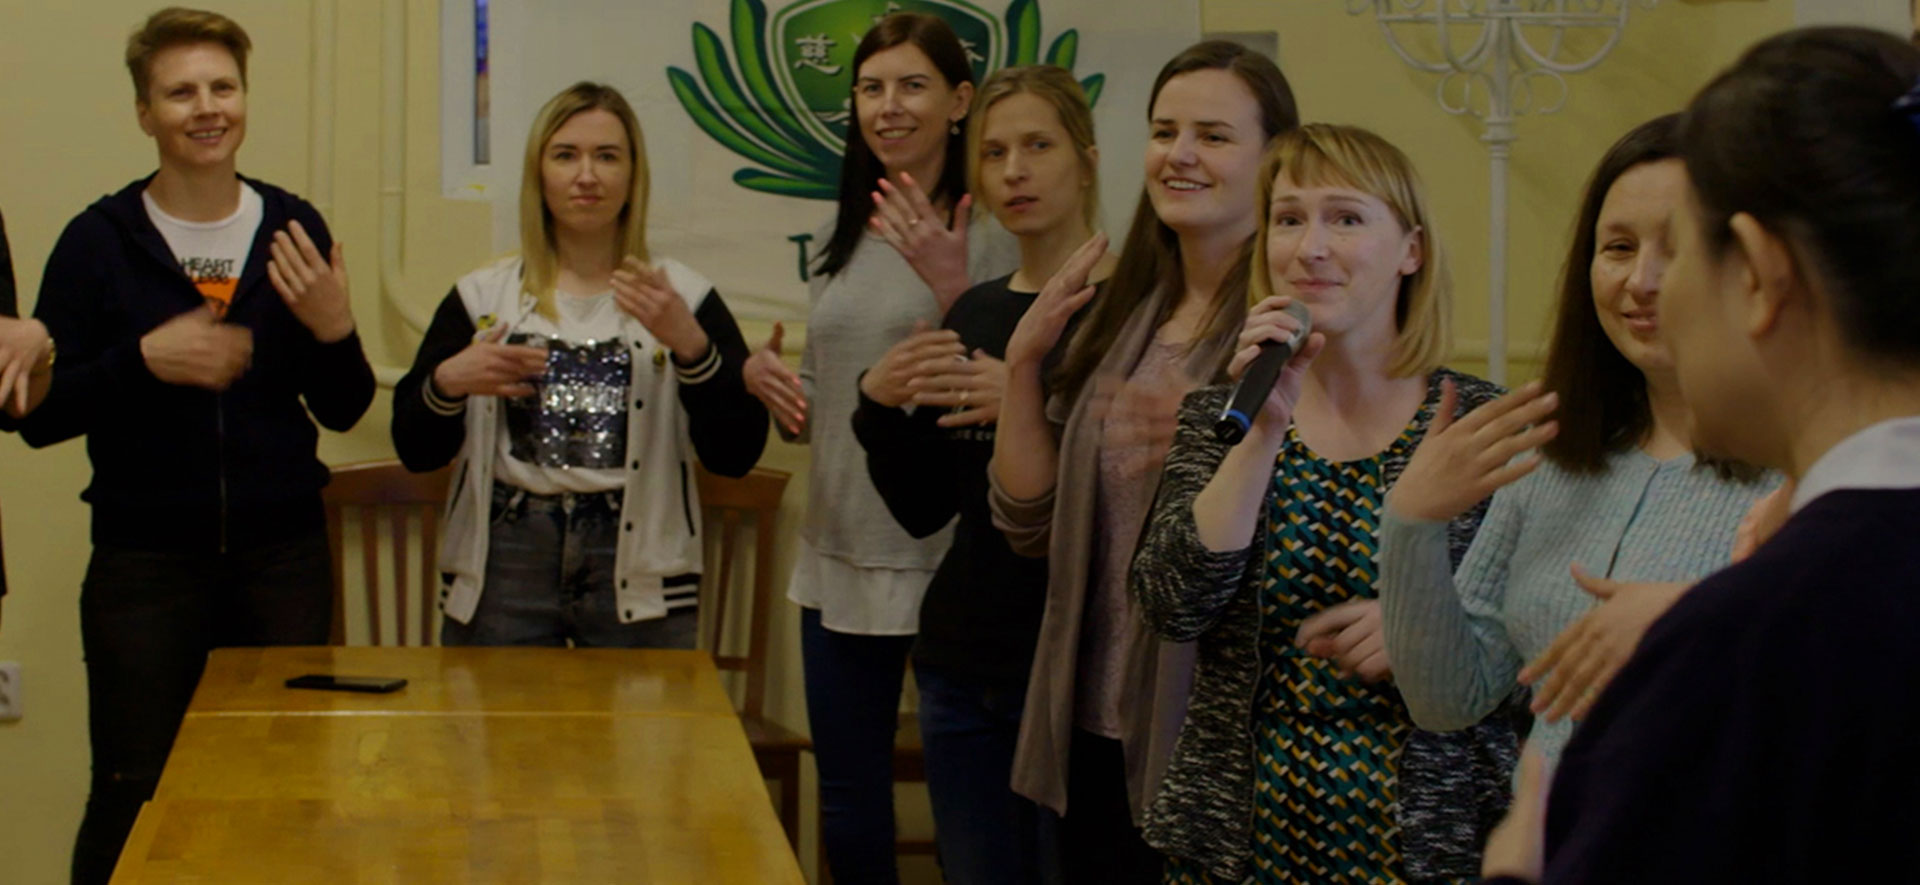 Voices Unite in Song at Tzu Chi’s Volunteer Training in Poland